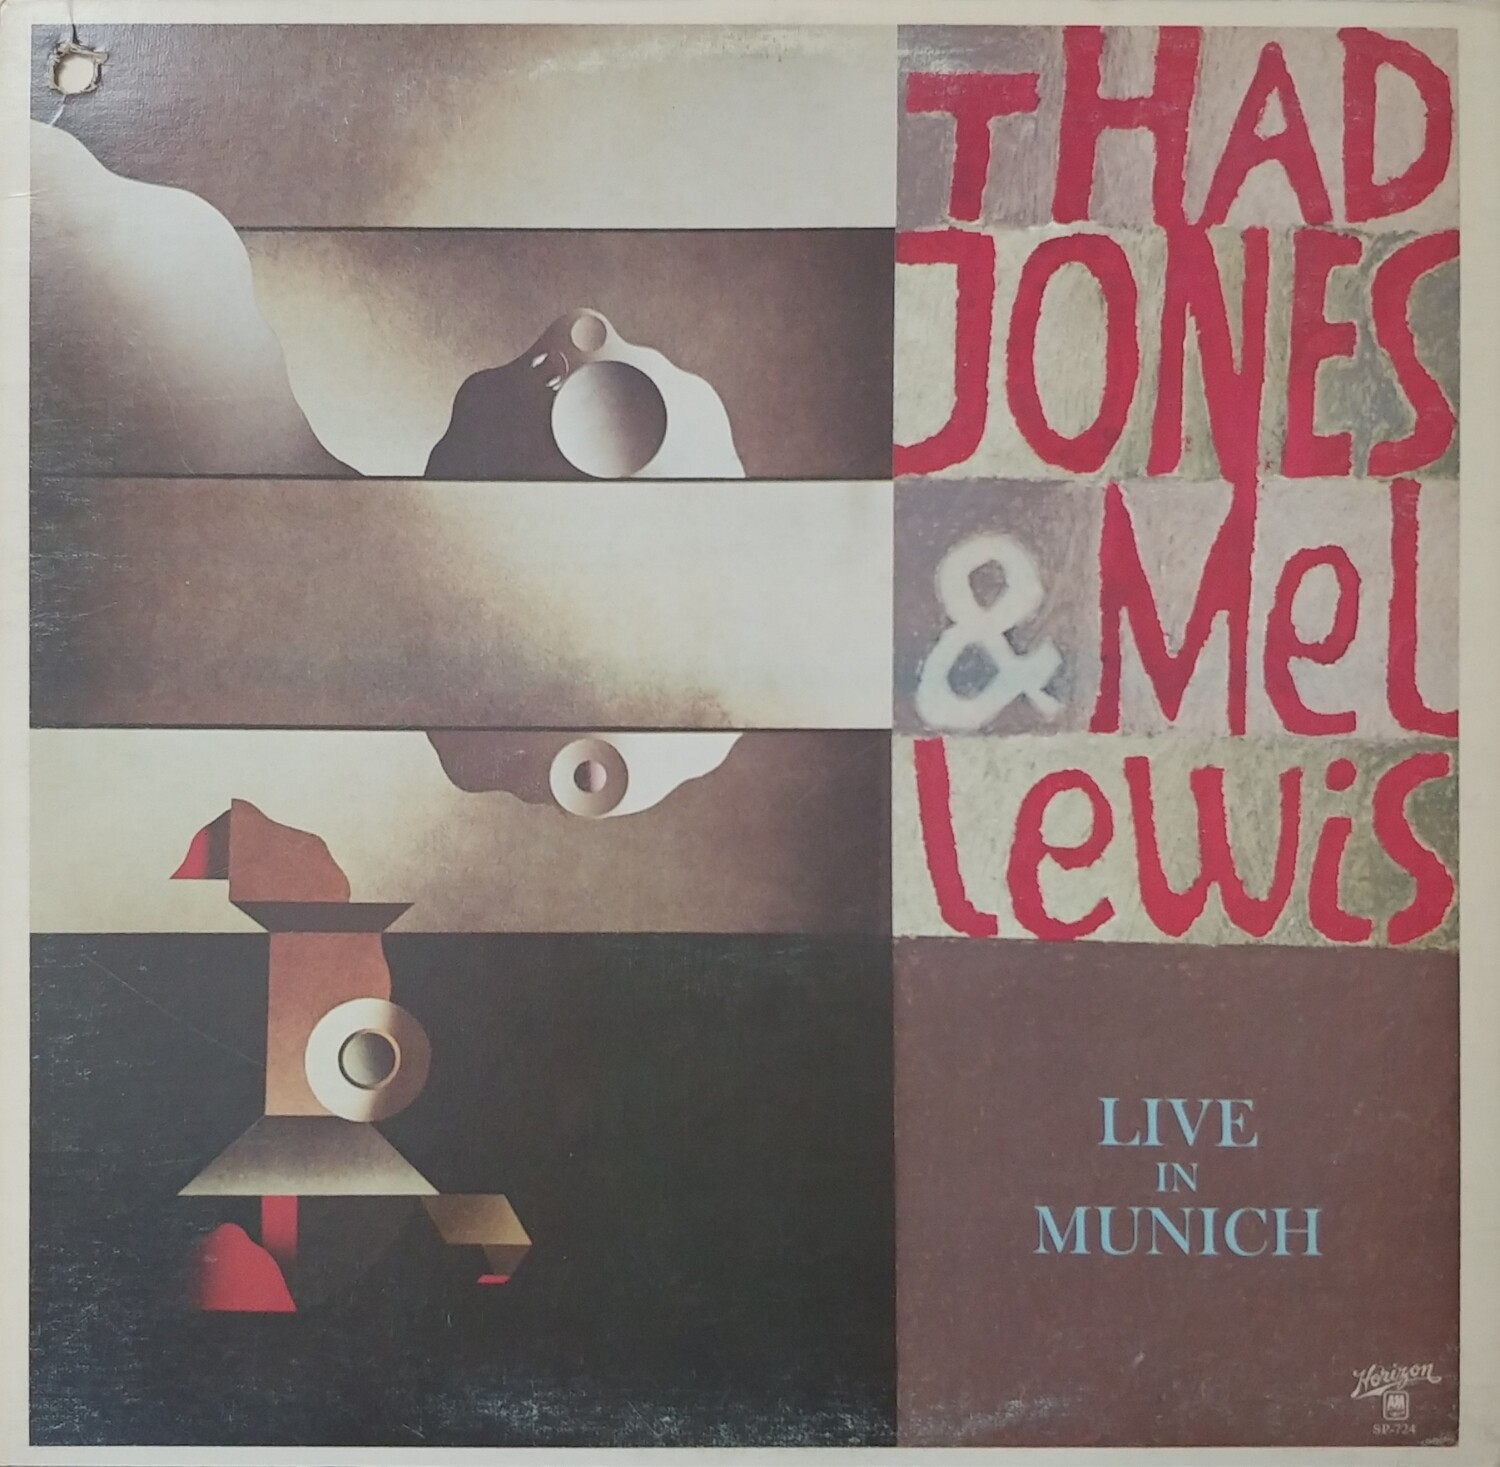 Thad Jones & Mel Lewis - Live in Munich (PROMO)